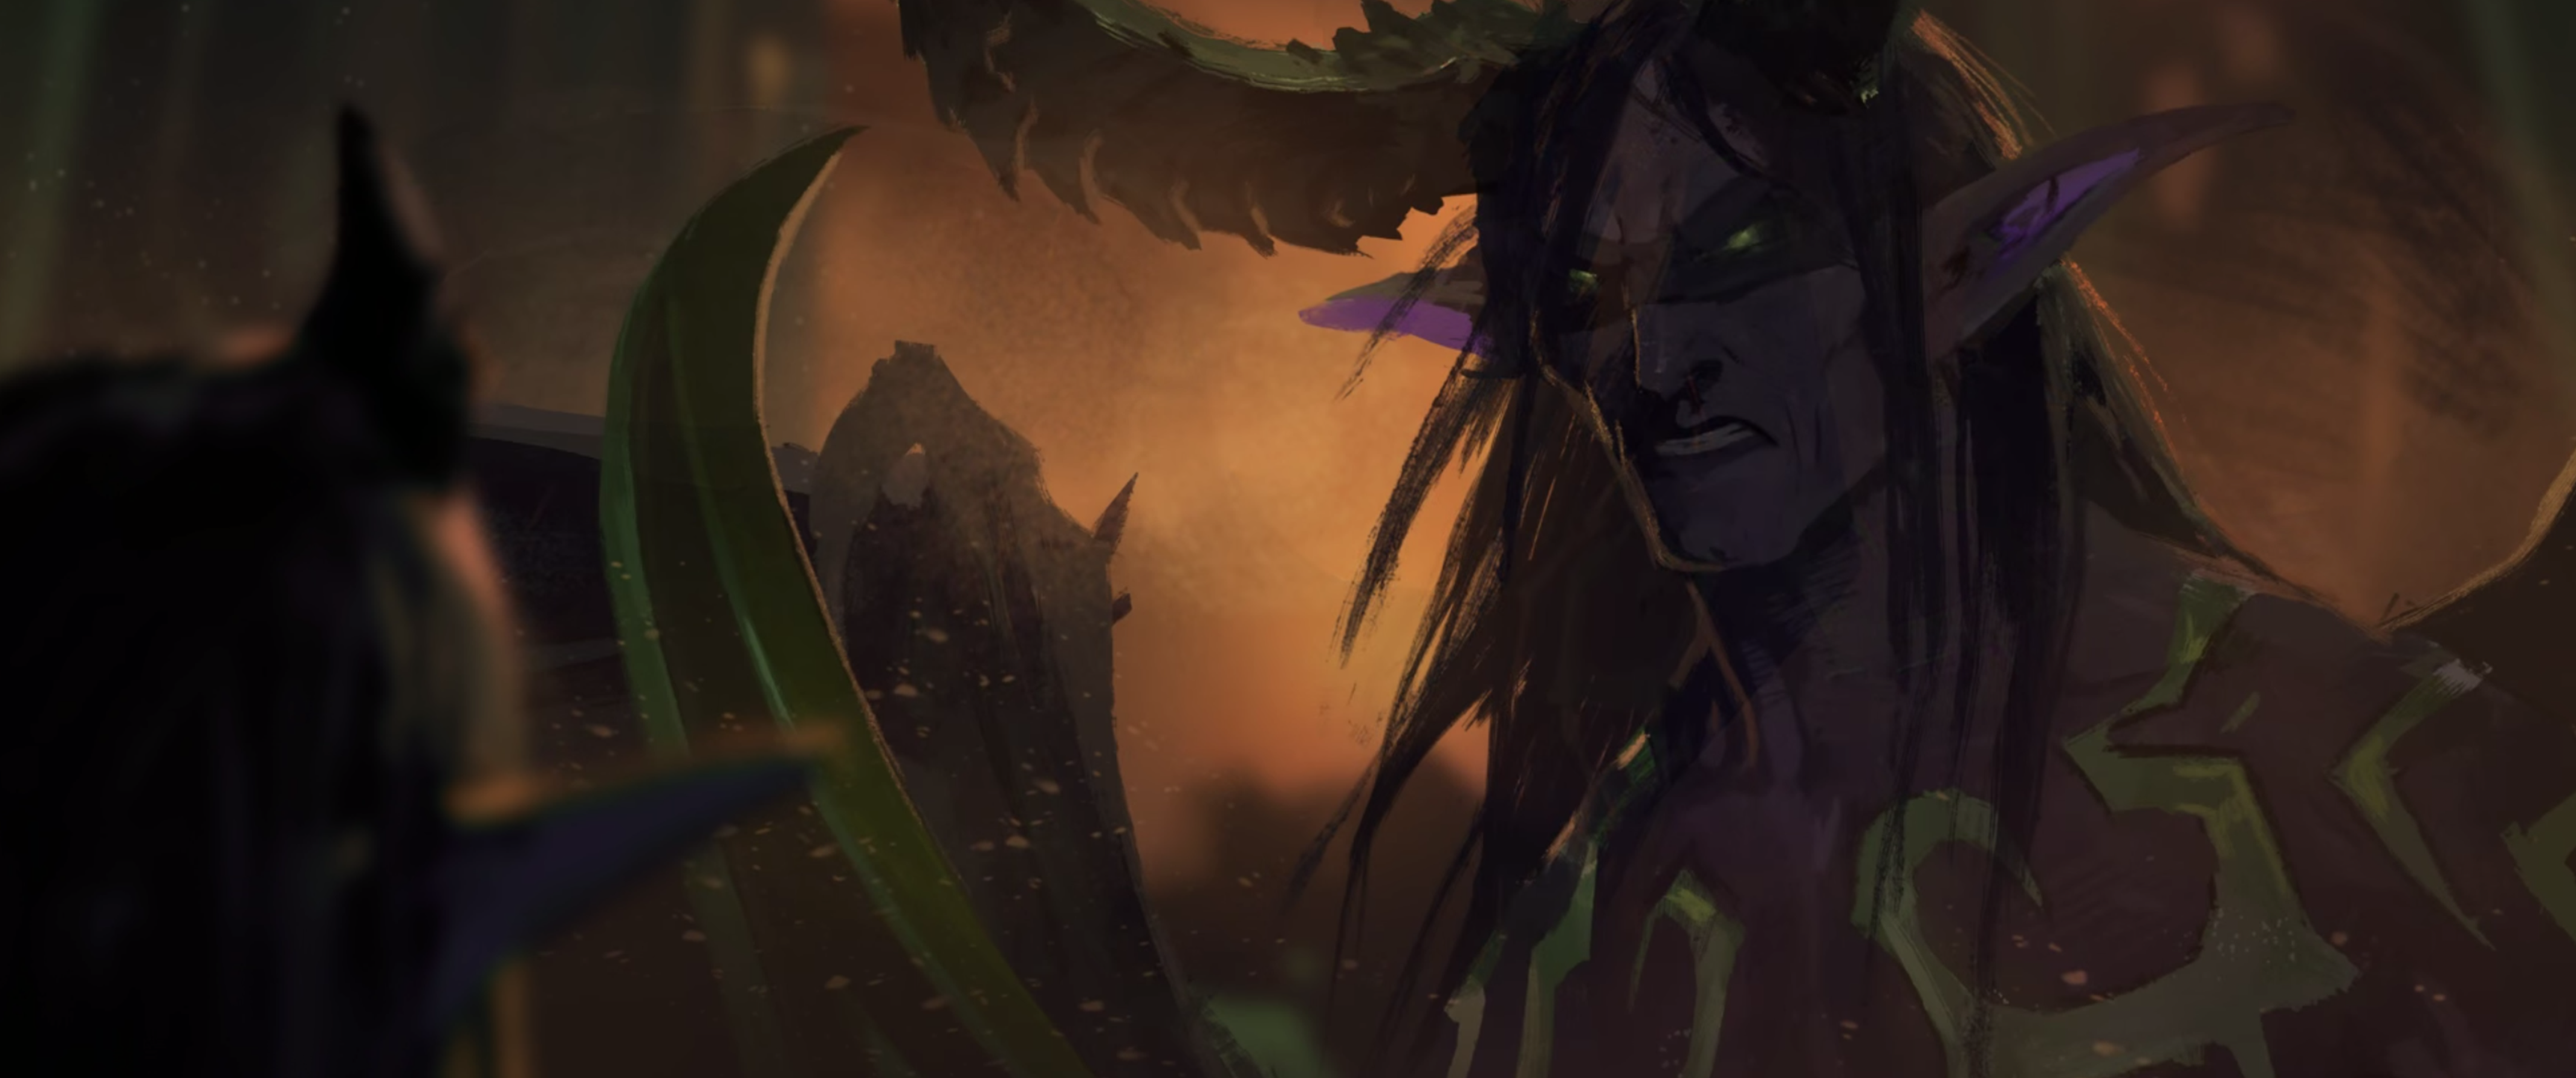 Обои аниме World of Warcraft Blizzard Entertainment на рабочий стол